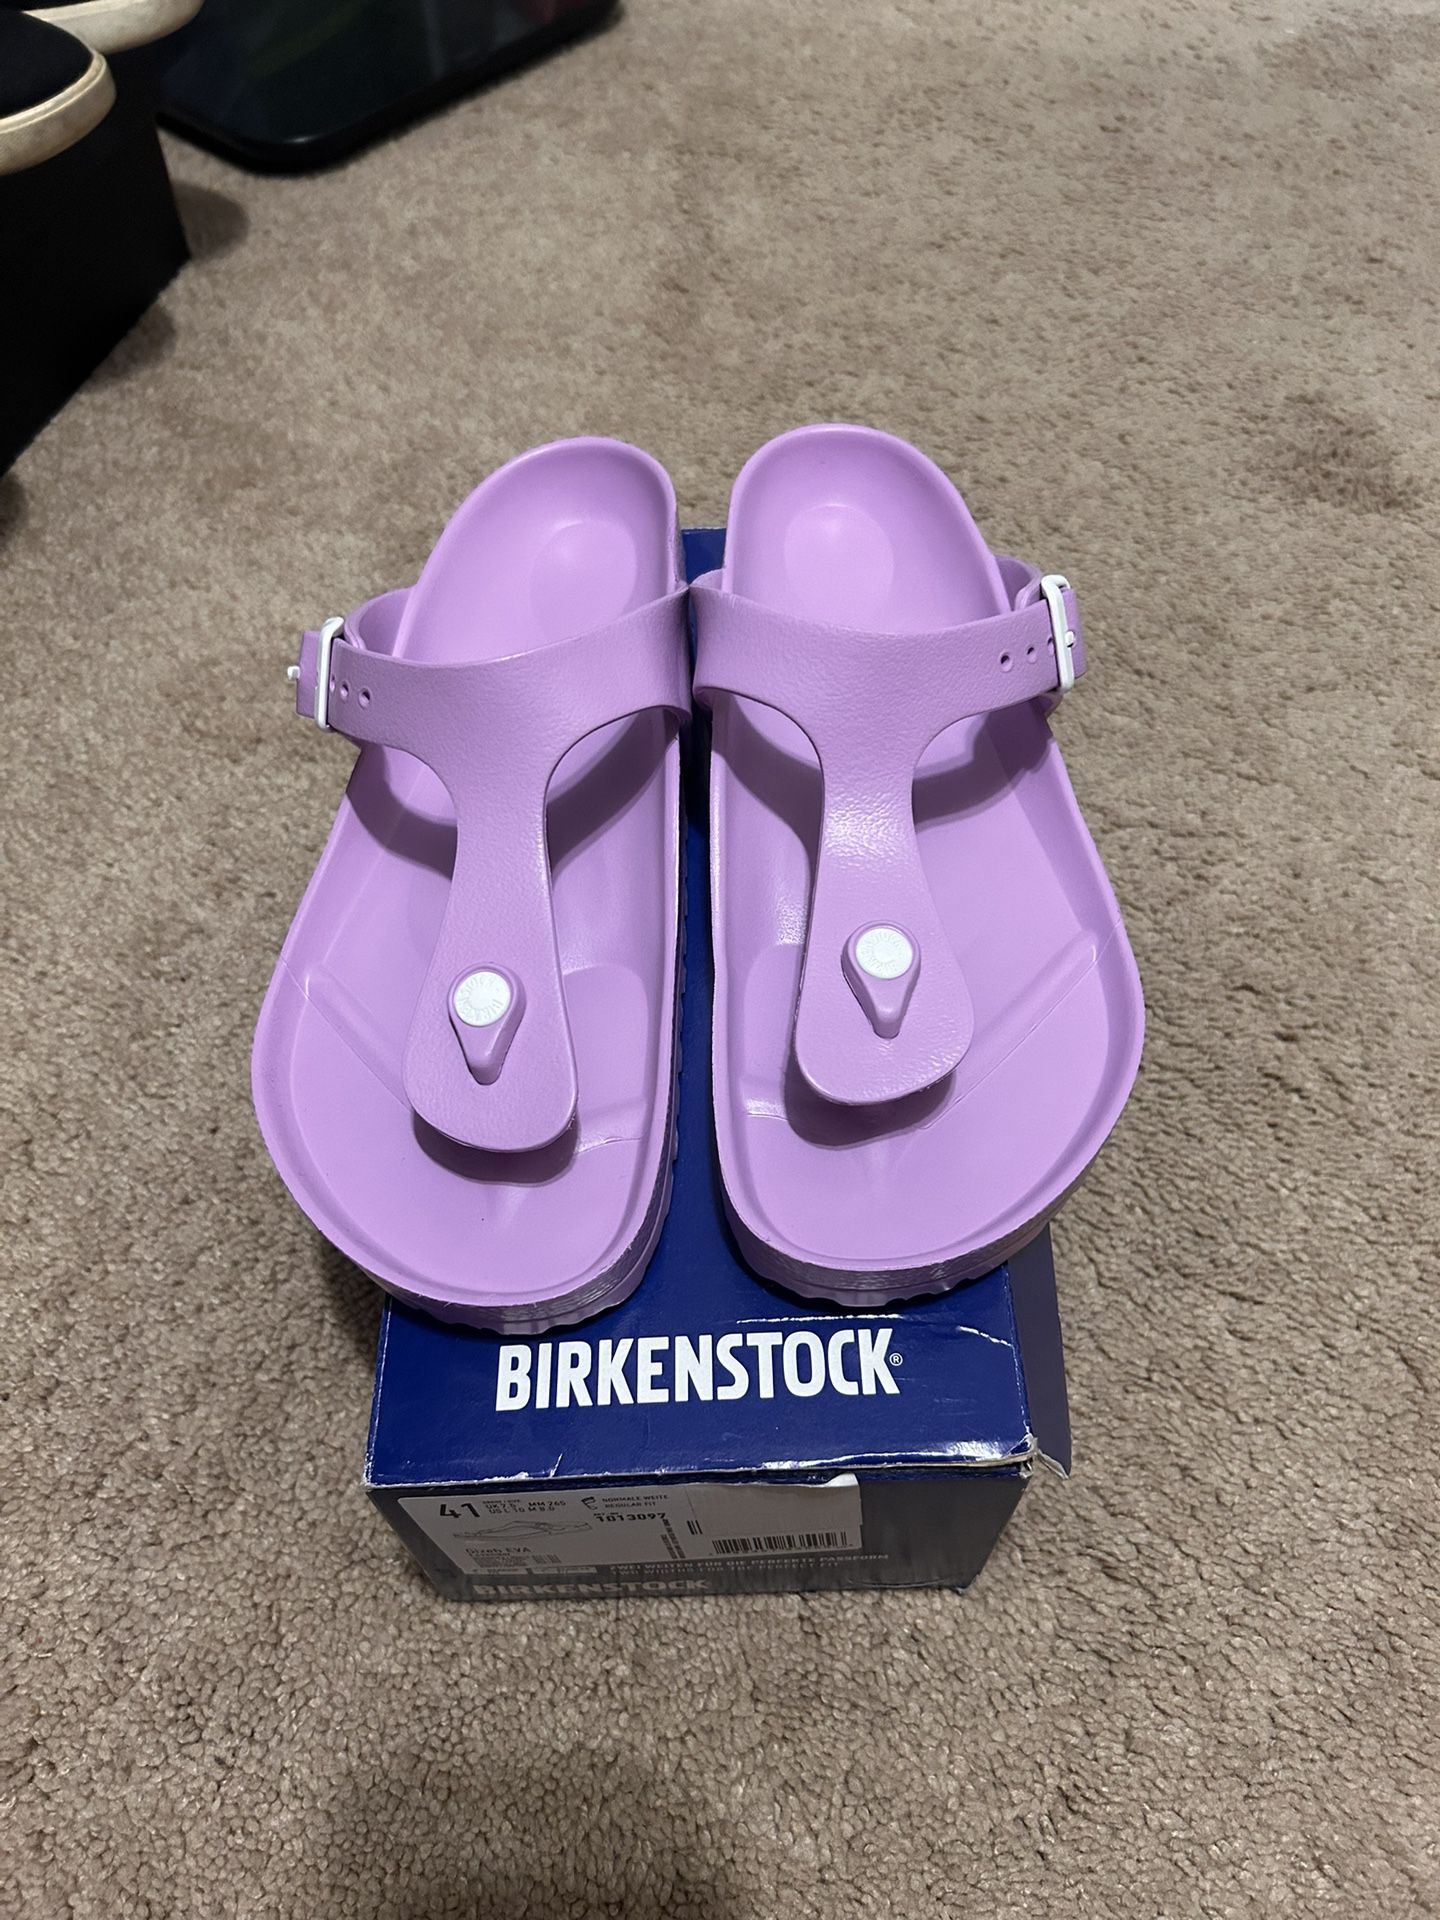 Birkenstock’s Size 10